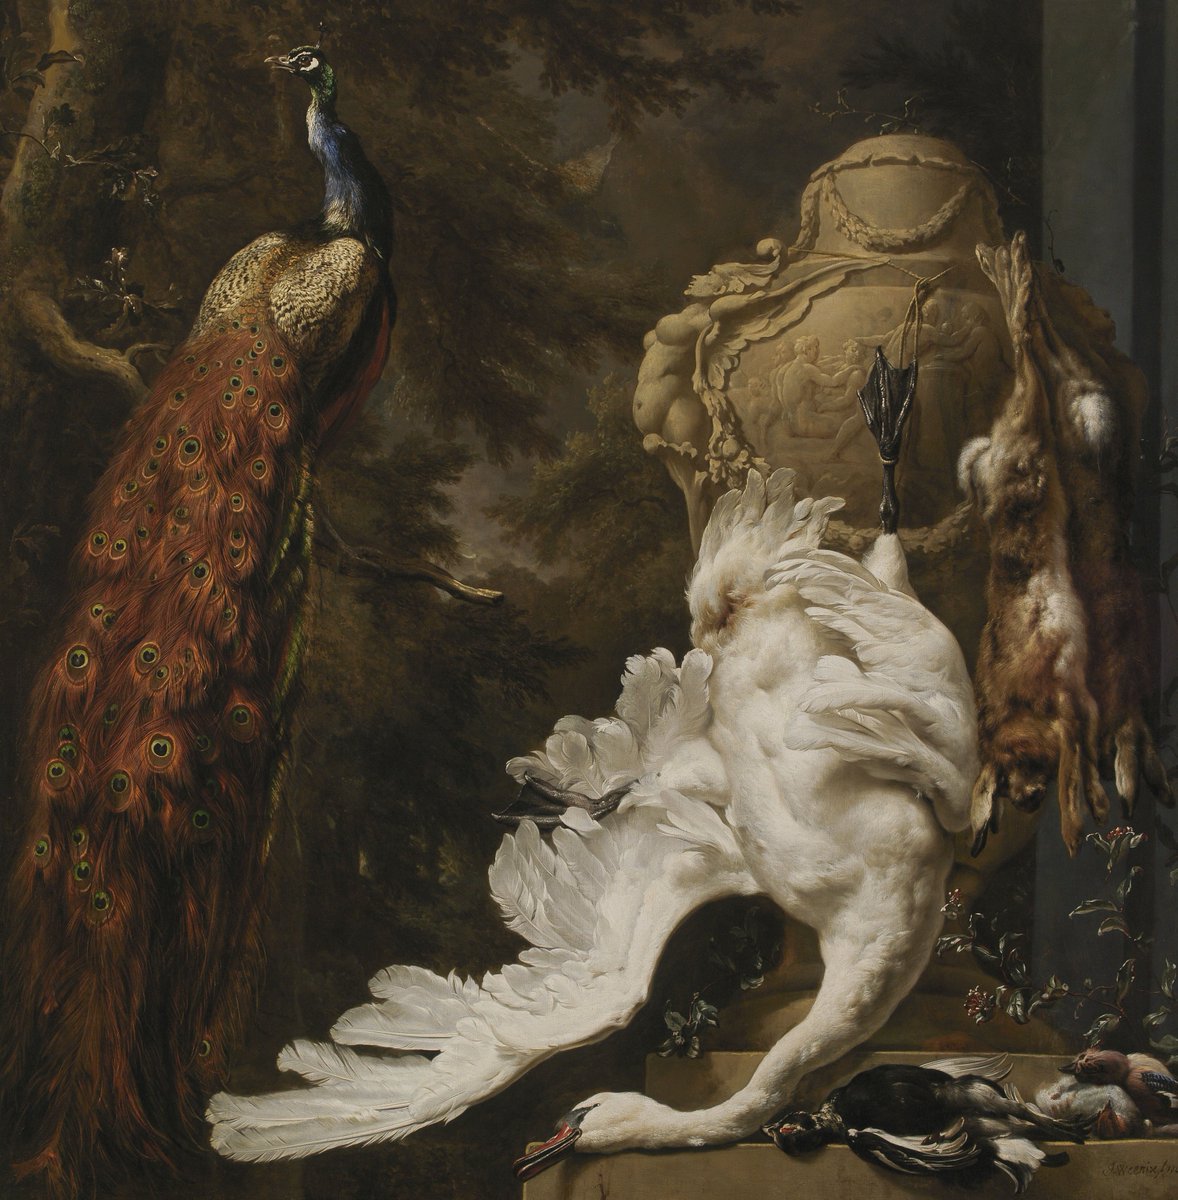 Jan Weenix, Peacock and Hunting Trophies, 1708. https://t.co/p09puDC7LJ